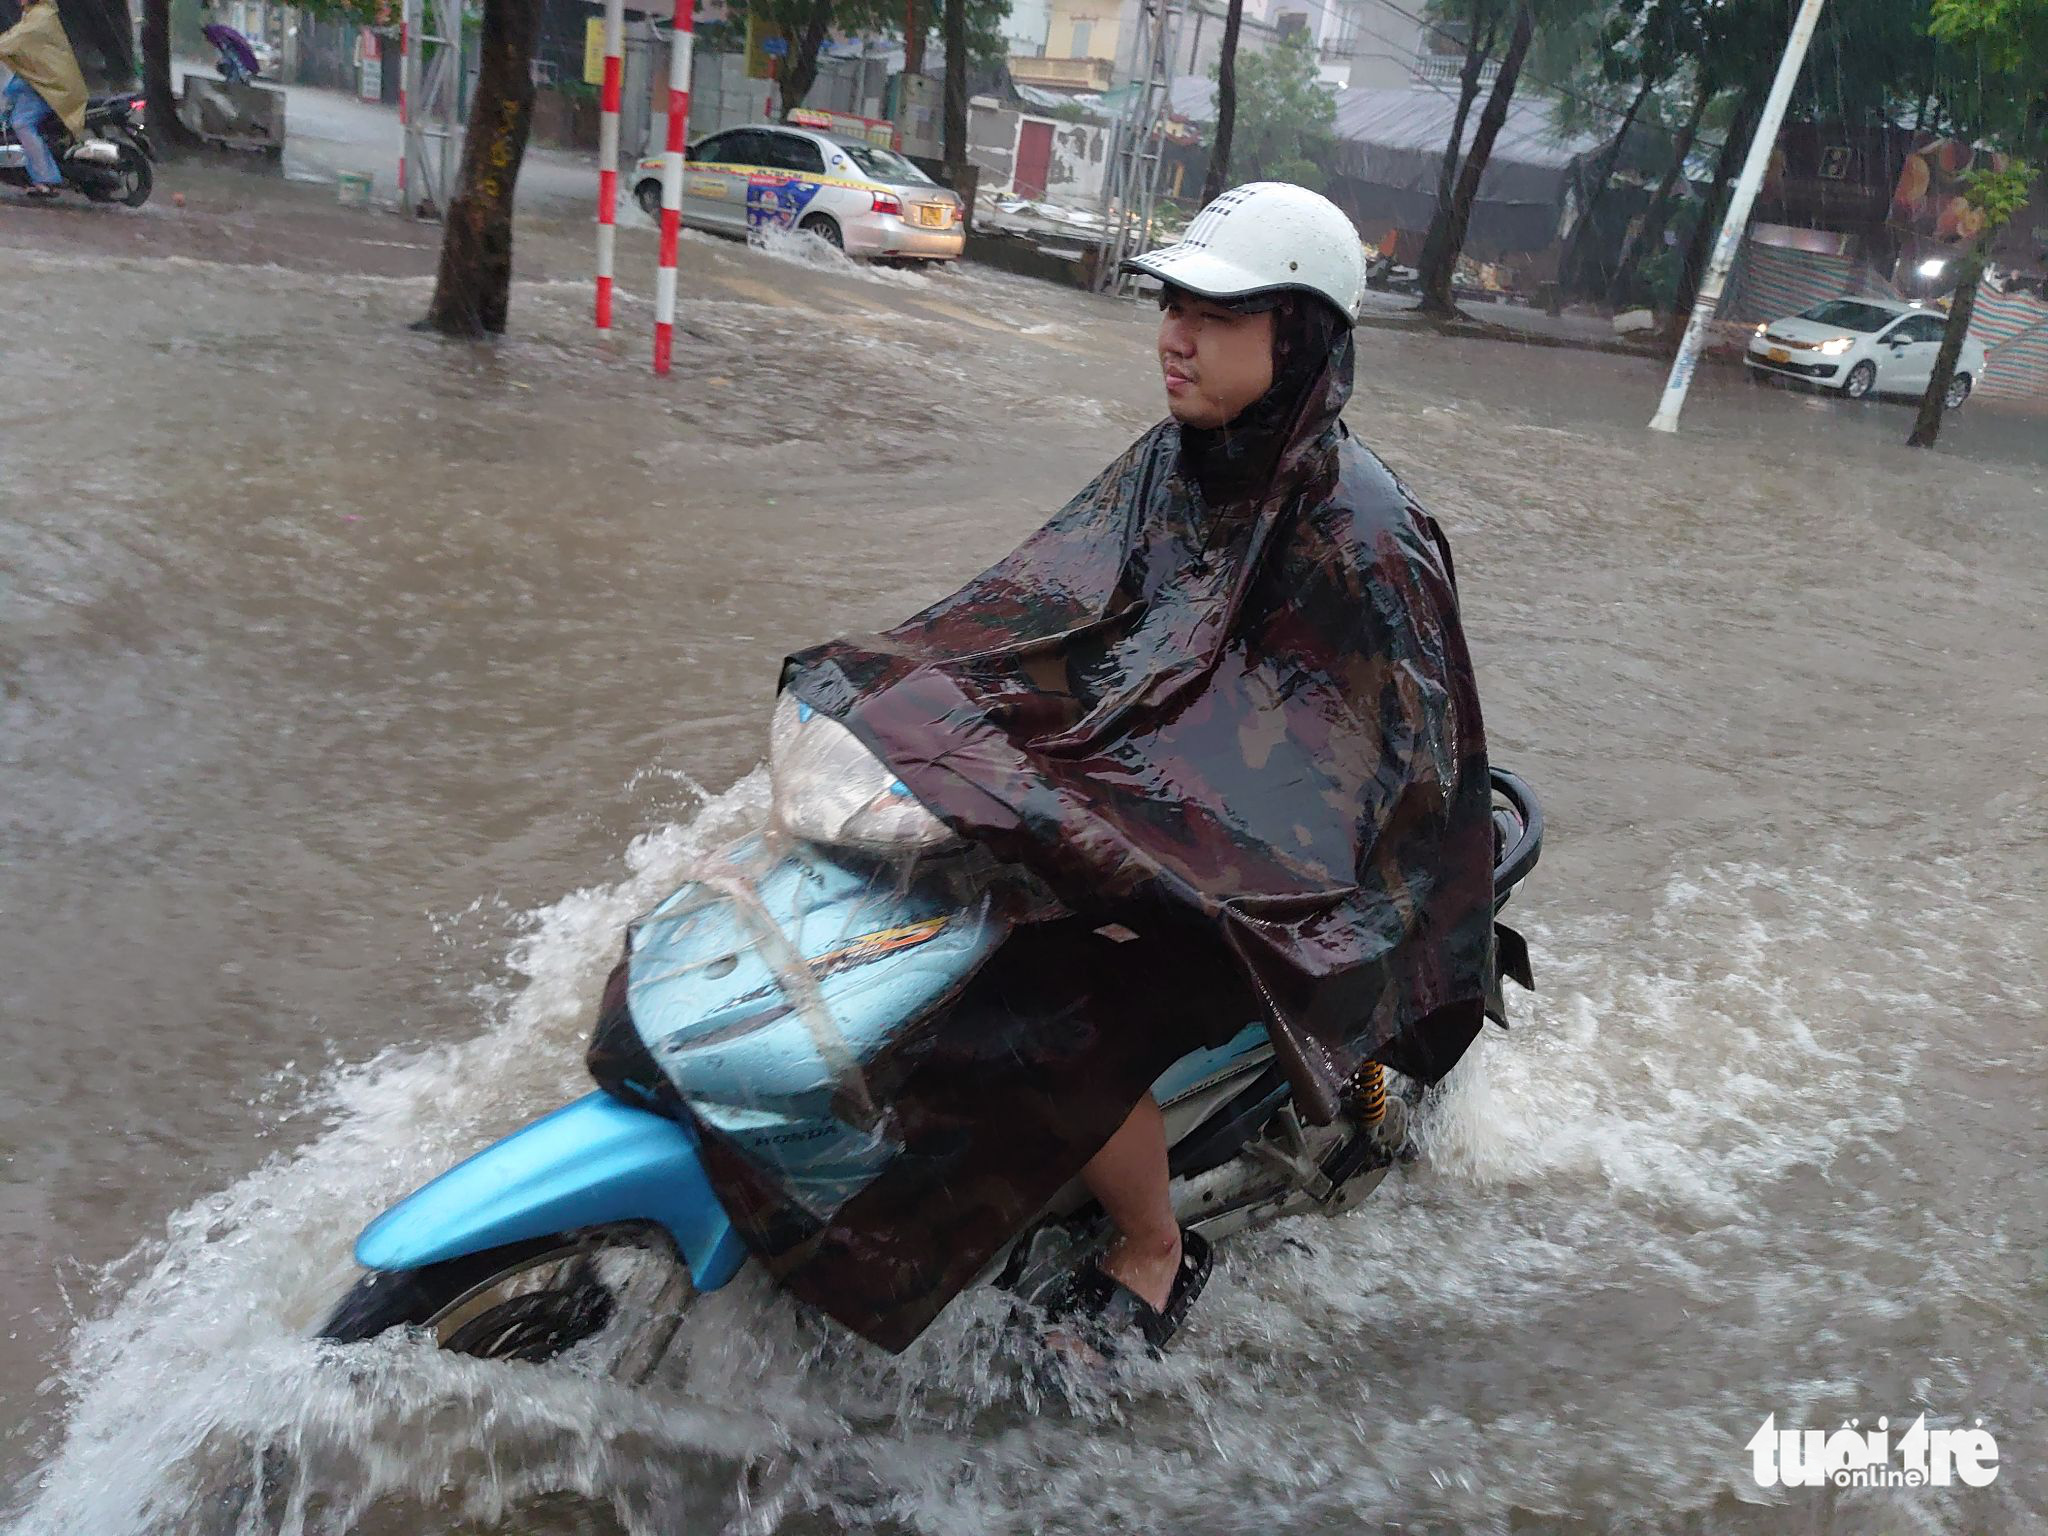 A motorcyclist travels on a flood street in Hanoi, August 12, 2022. Photo: Pham Nam Tran / Tuoi Tre